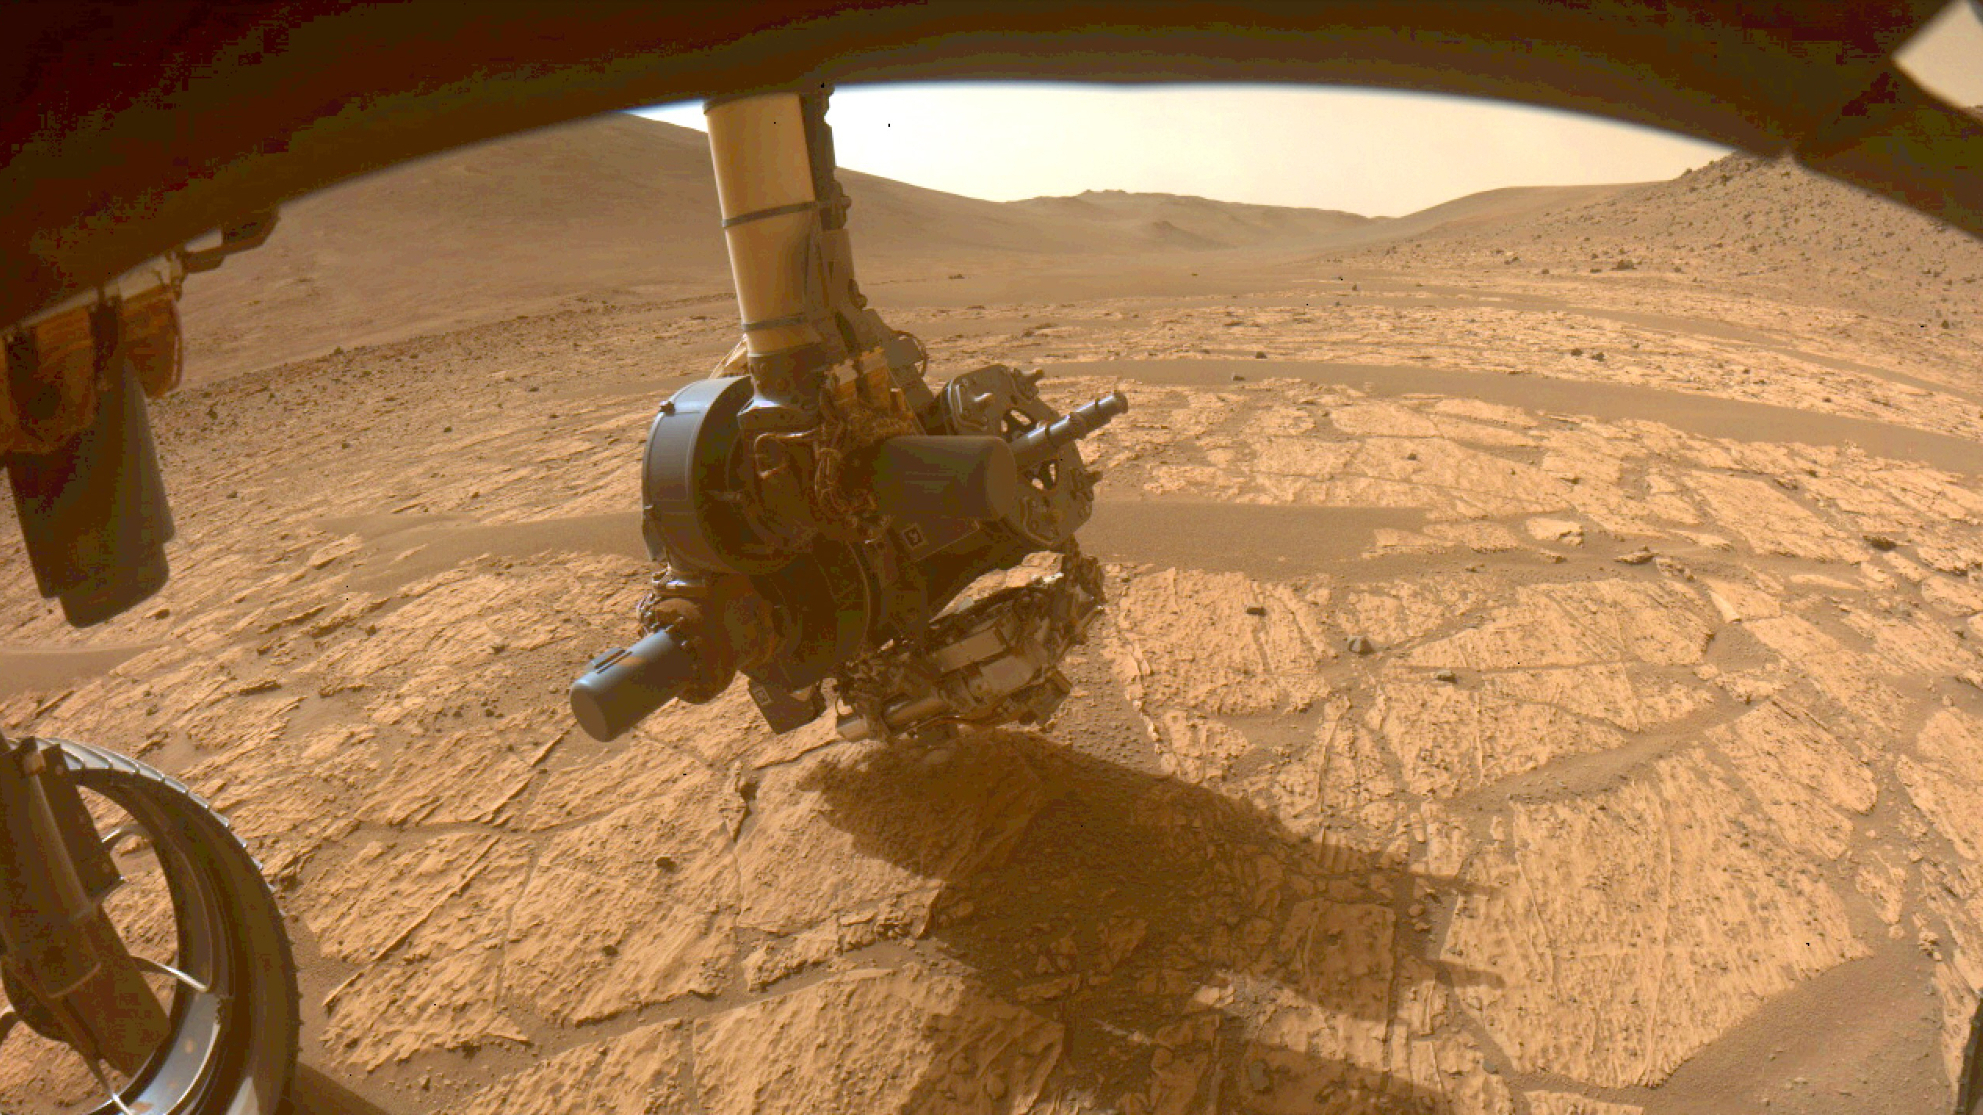  Perseverance Mars rover team revives life-hunting instrument after 6 months of effort 